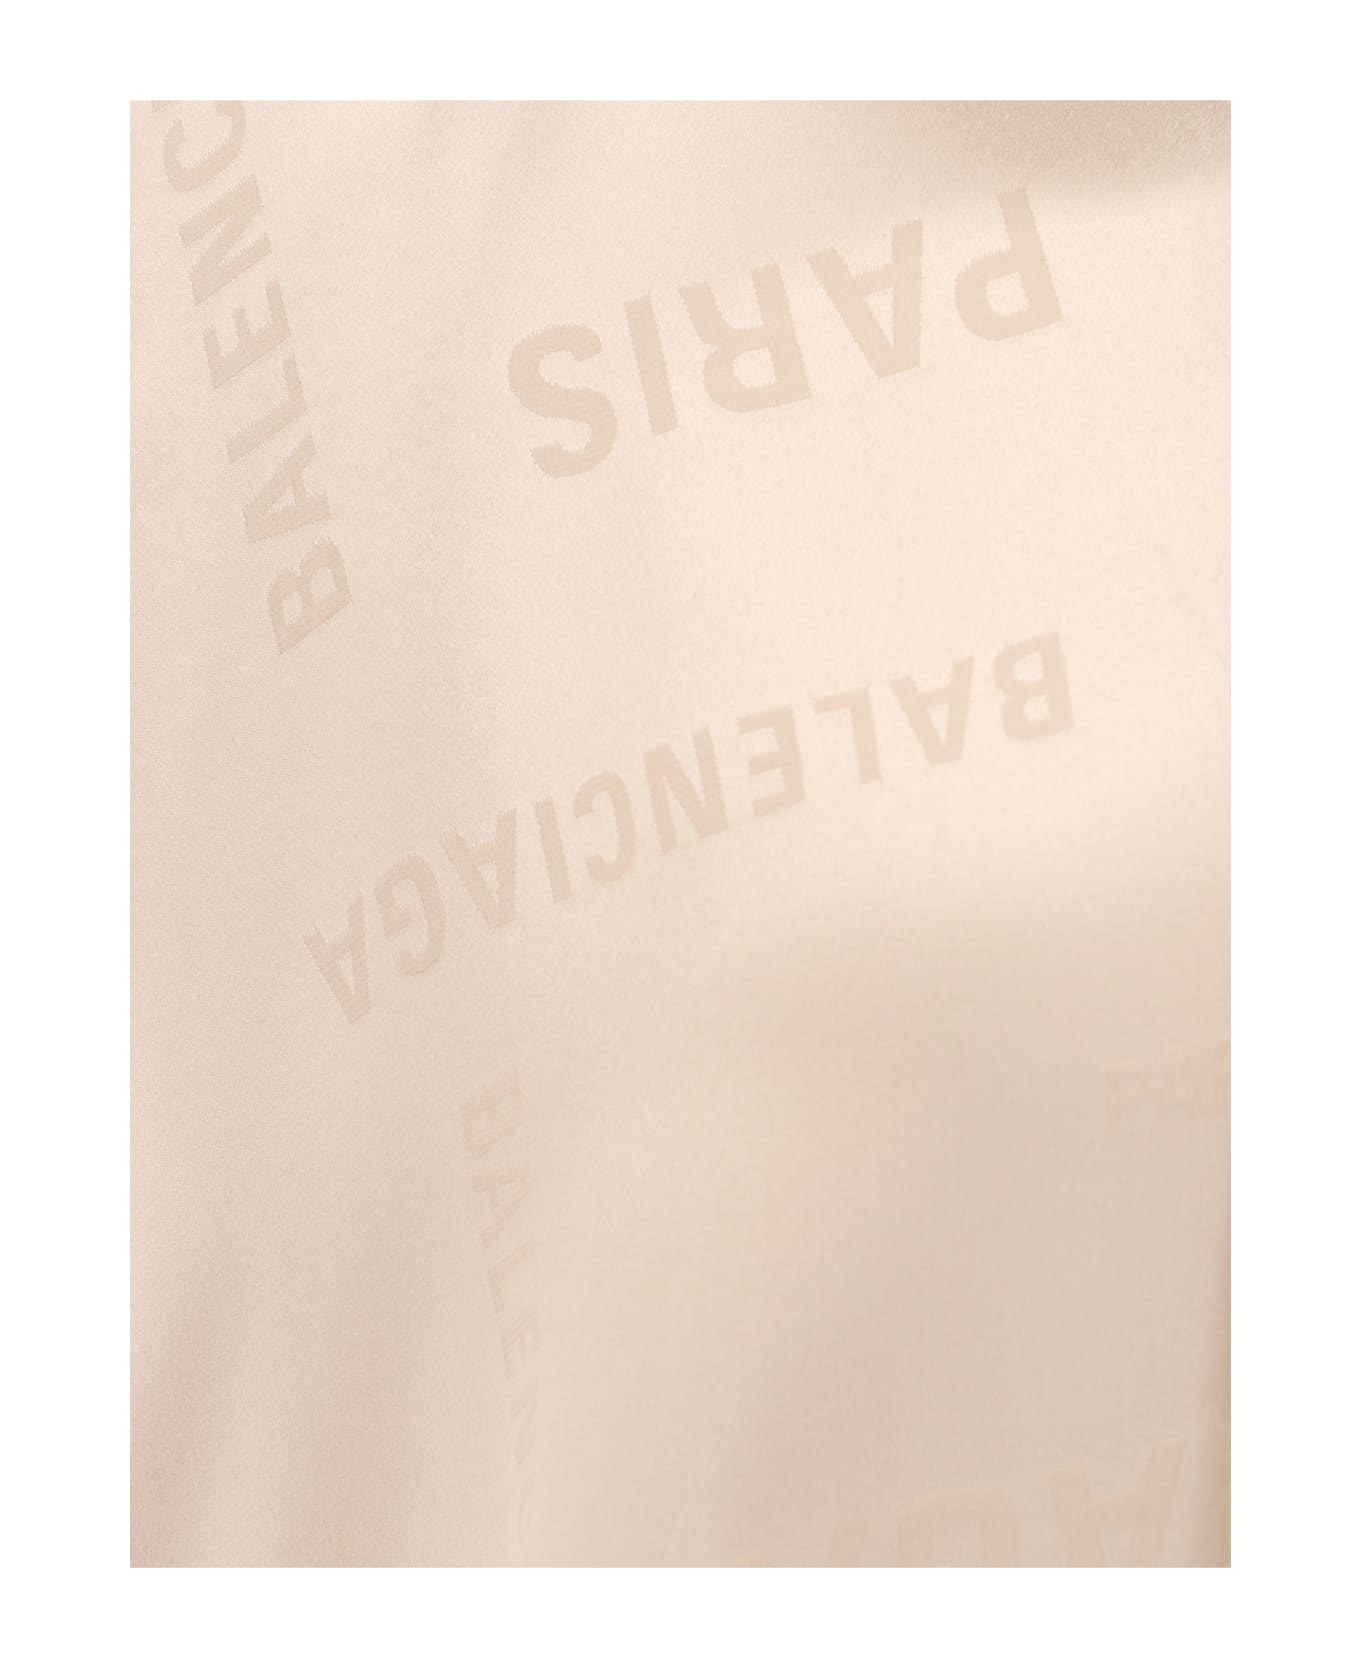 Balenciaga Silk Shirt - Beige ブラウス